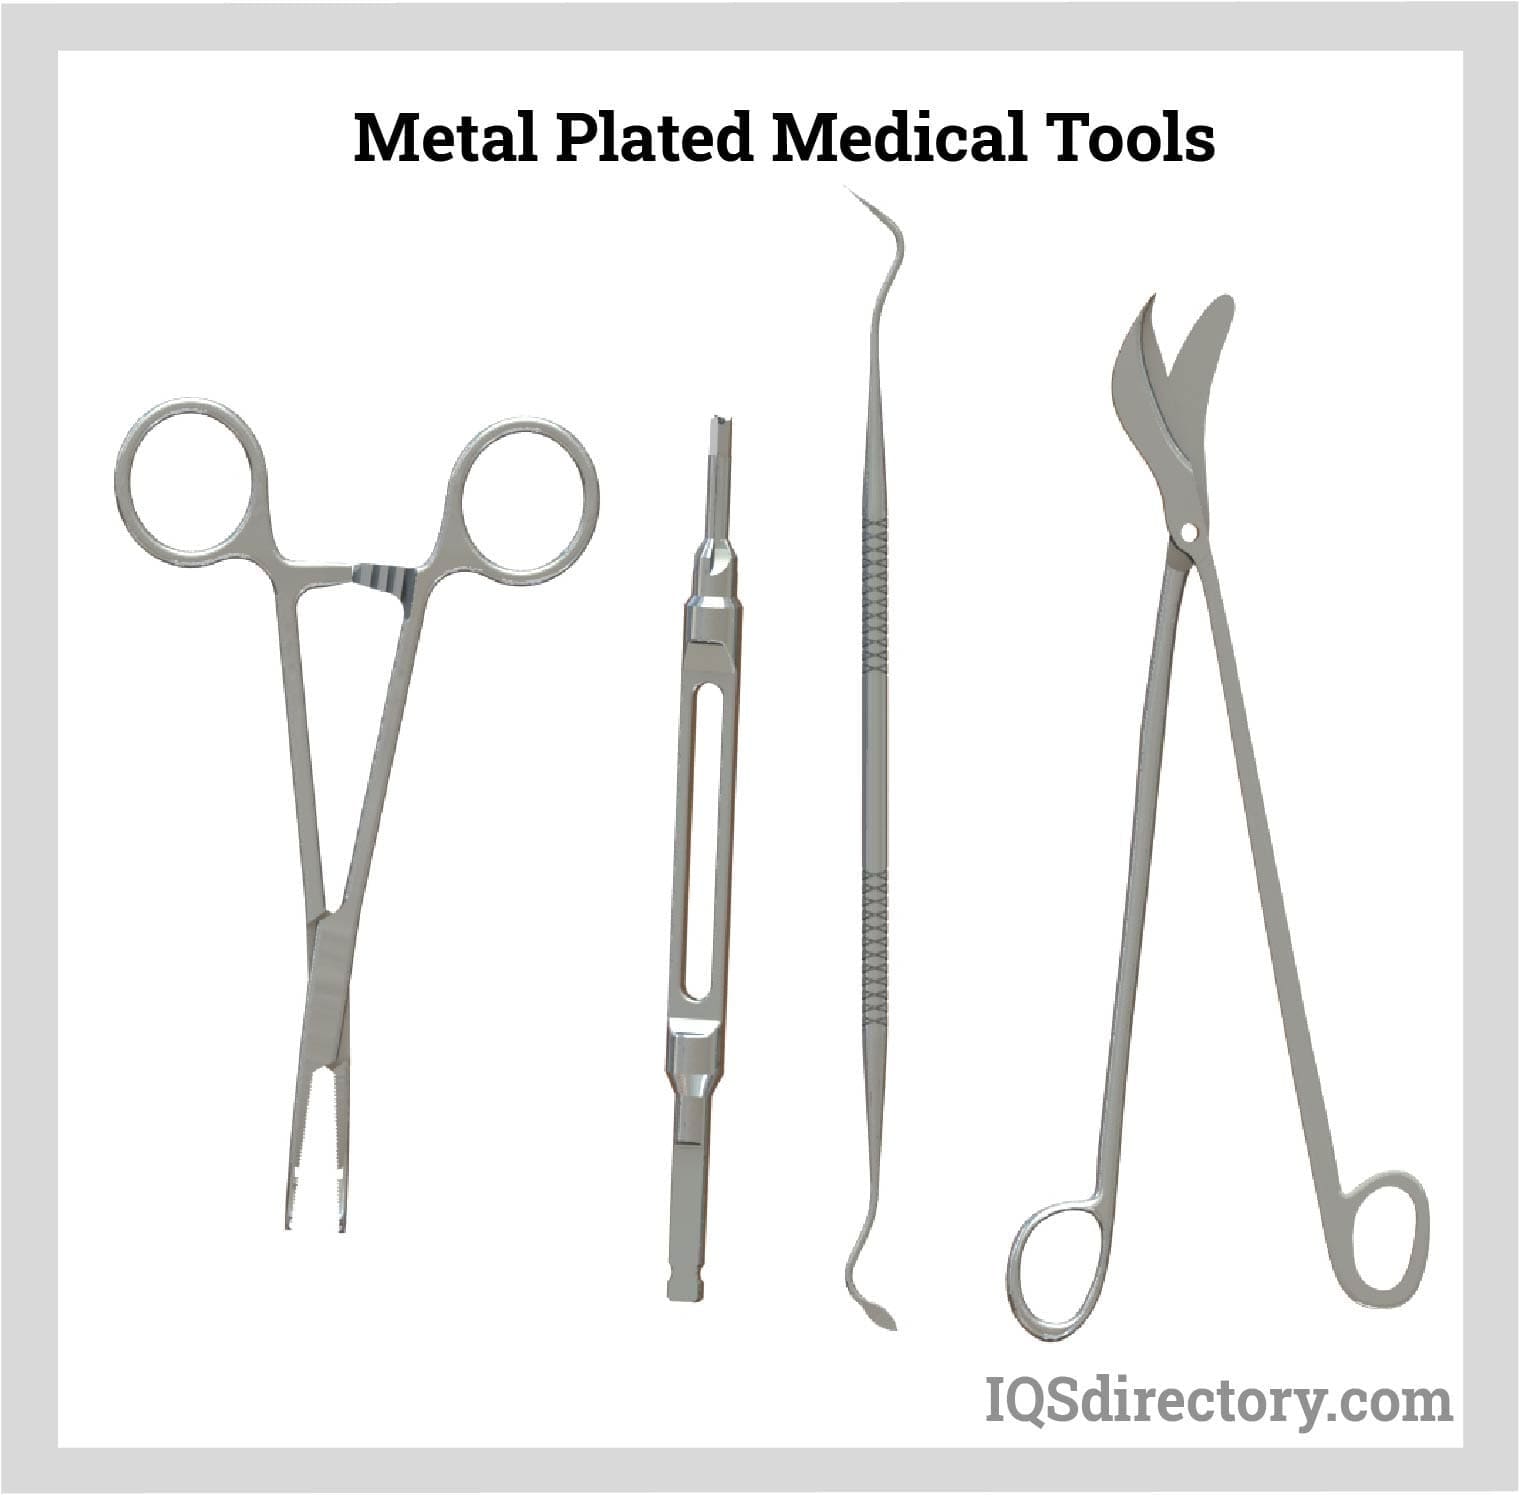 Metal Plated Medical Tools